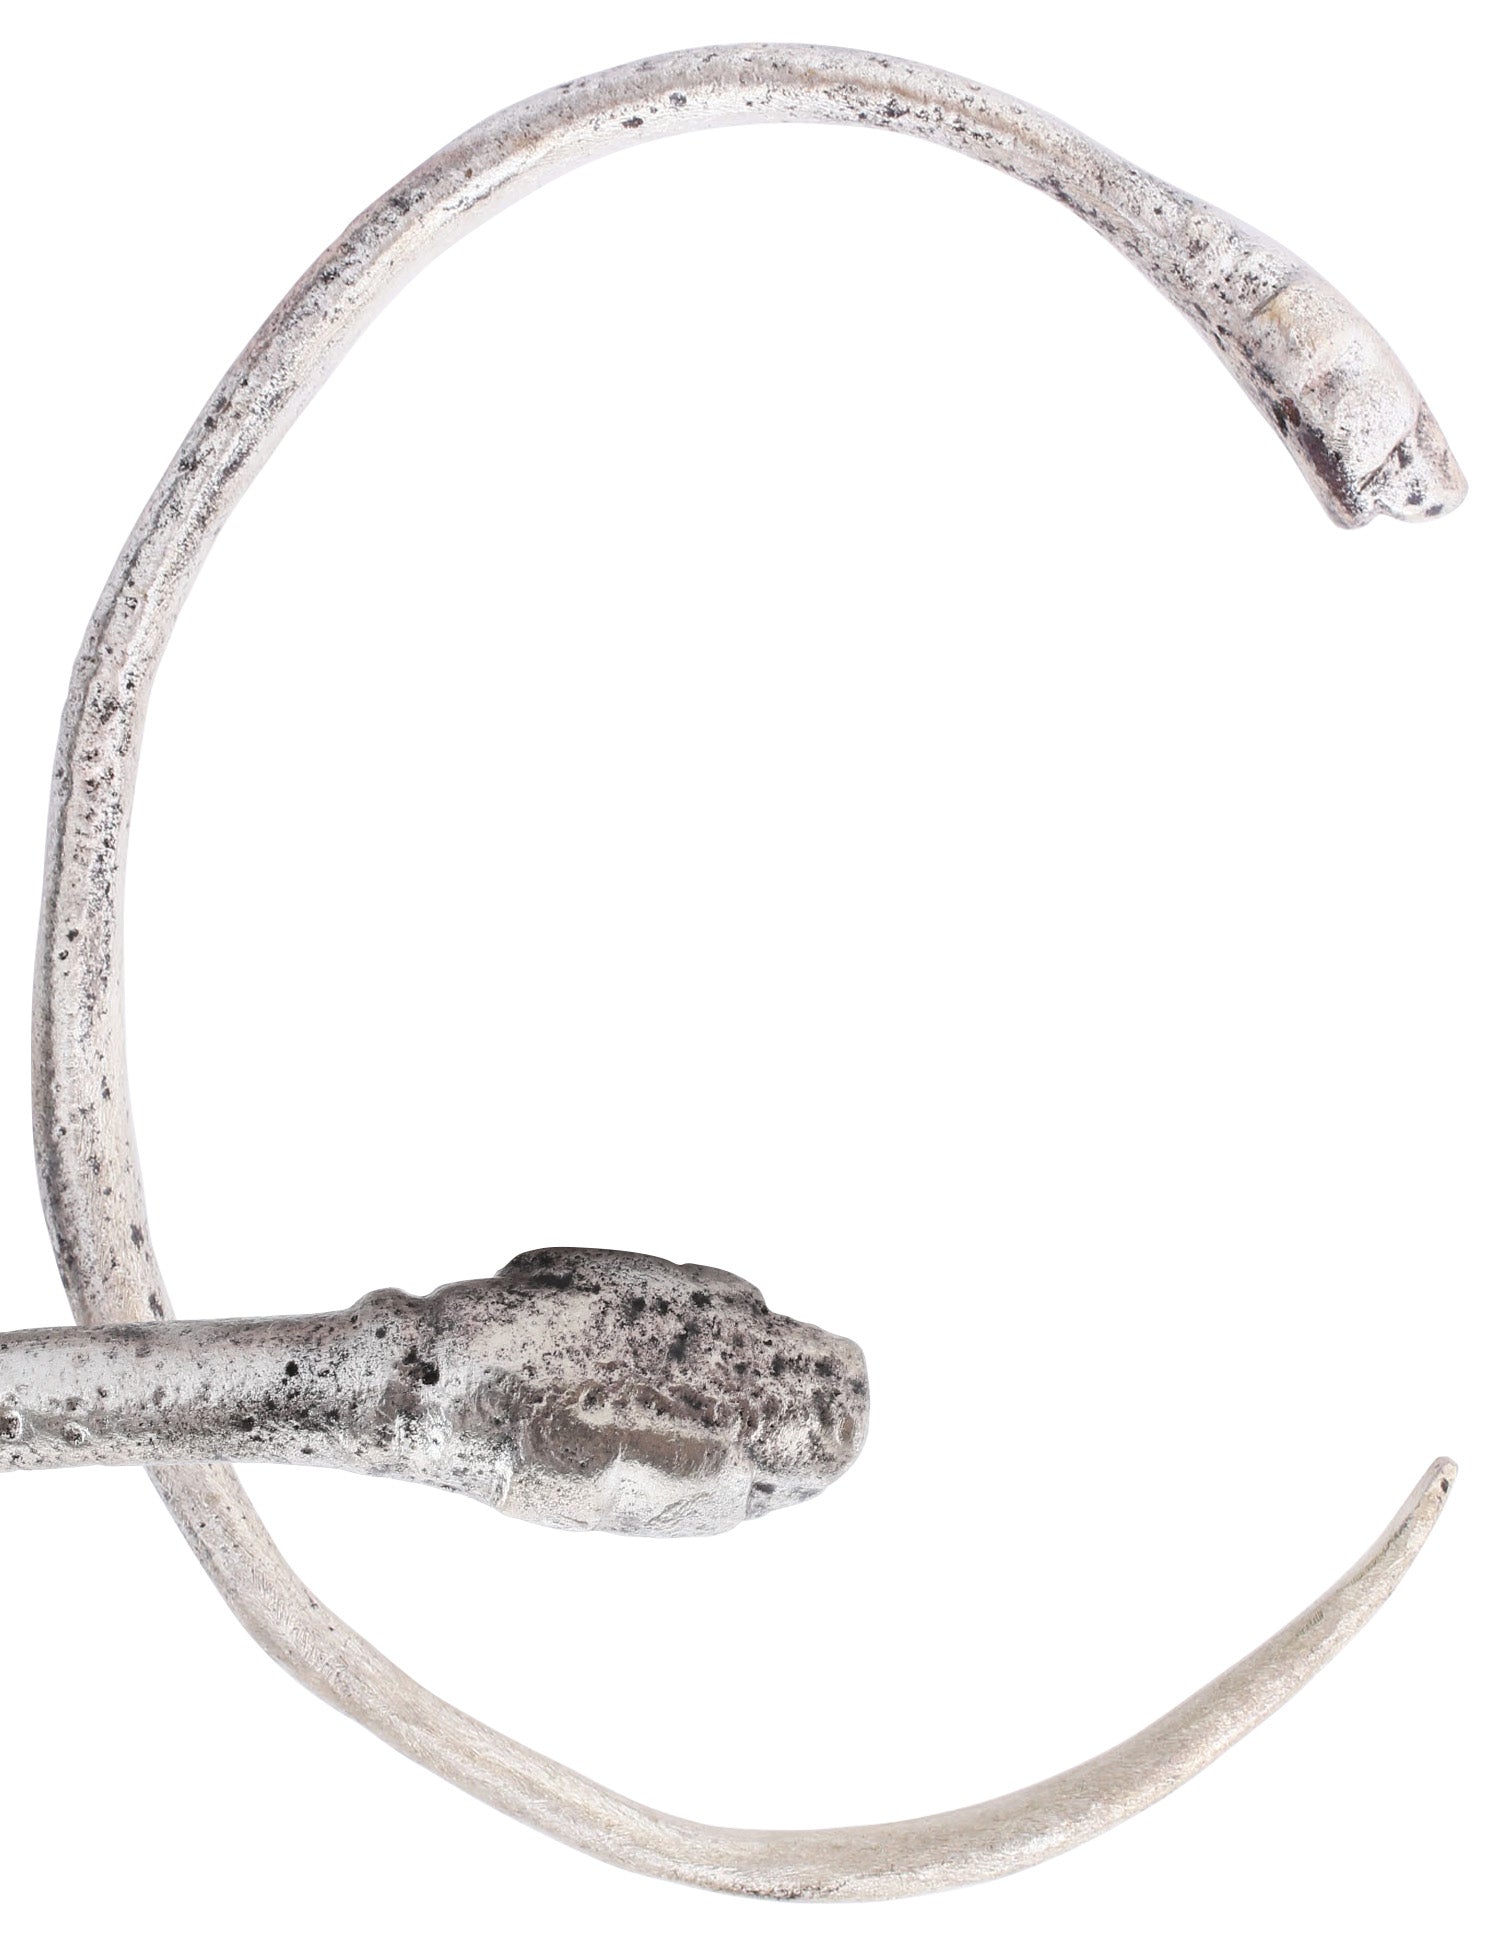 VIKING BRACELET, 10TH-11TH CENTURY AD - Picardi Jewelry